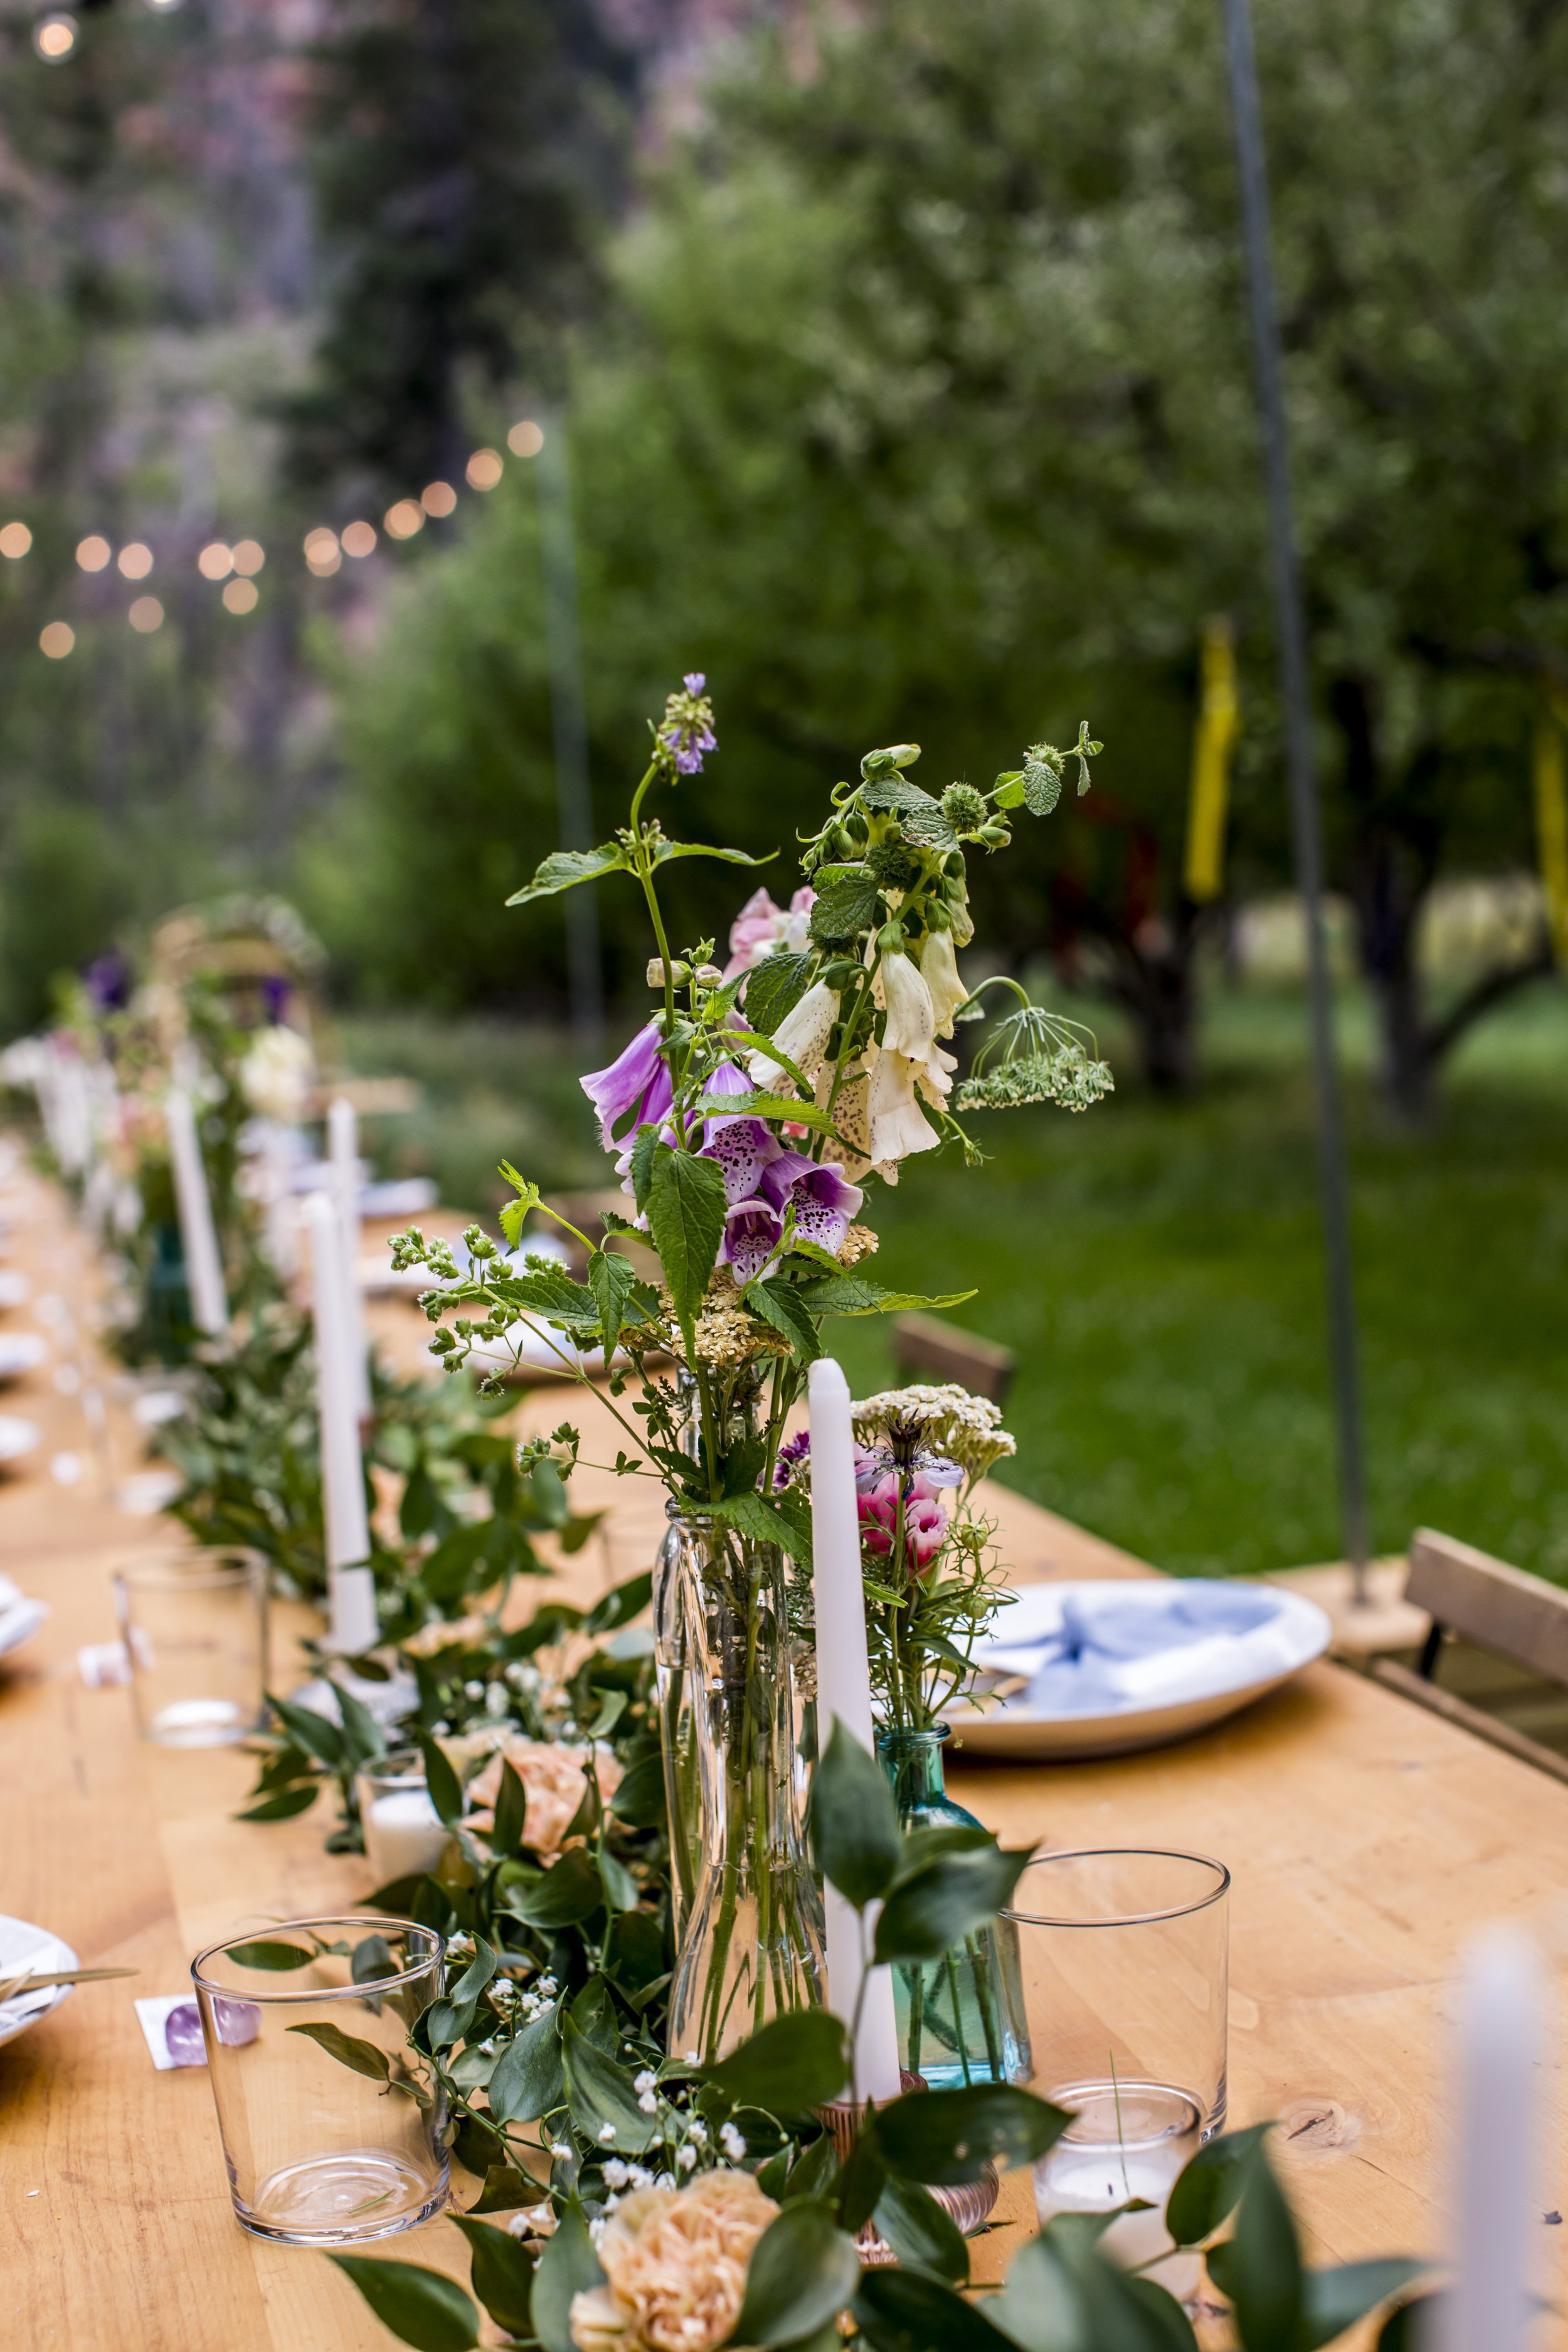 Romantic summer solstice orchard wedding table decor